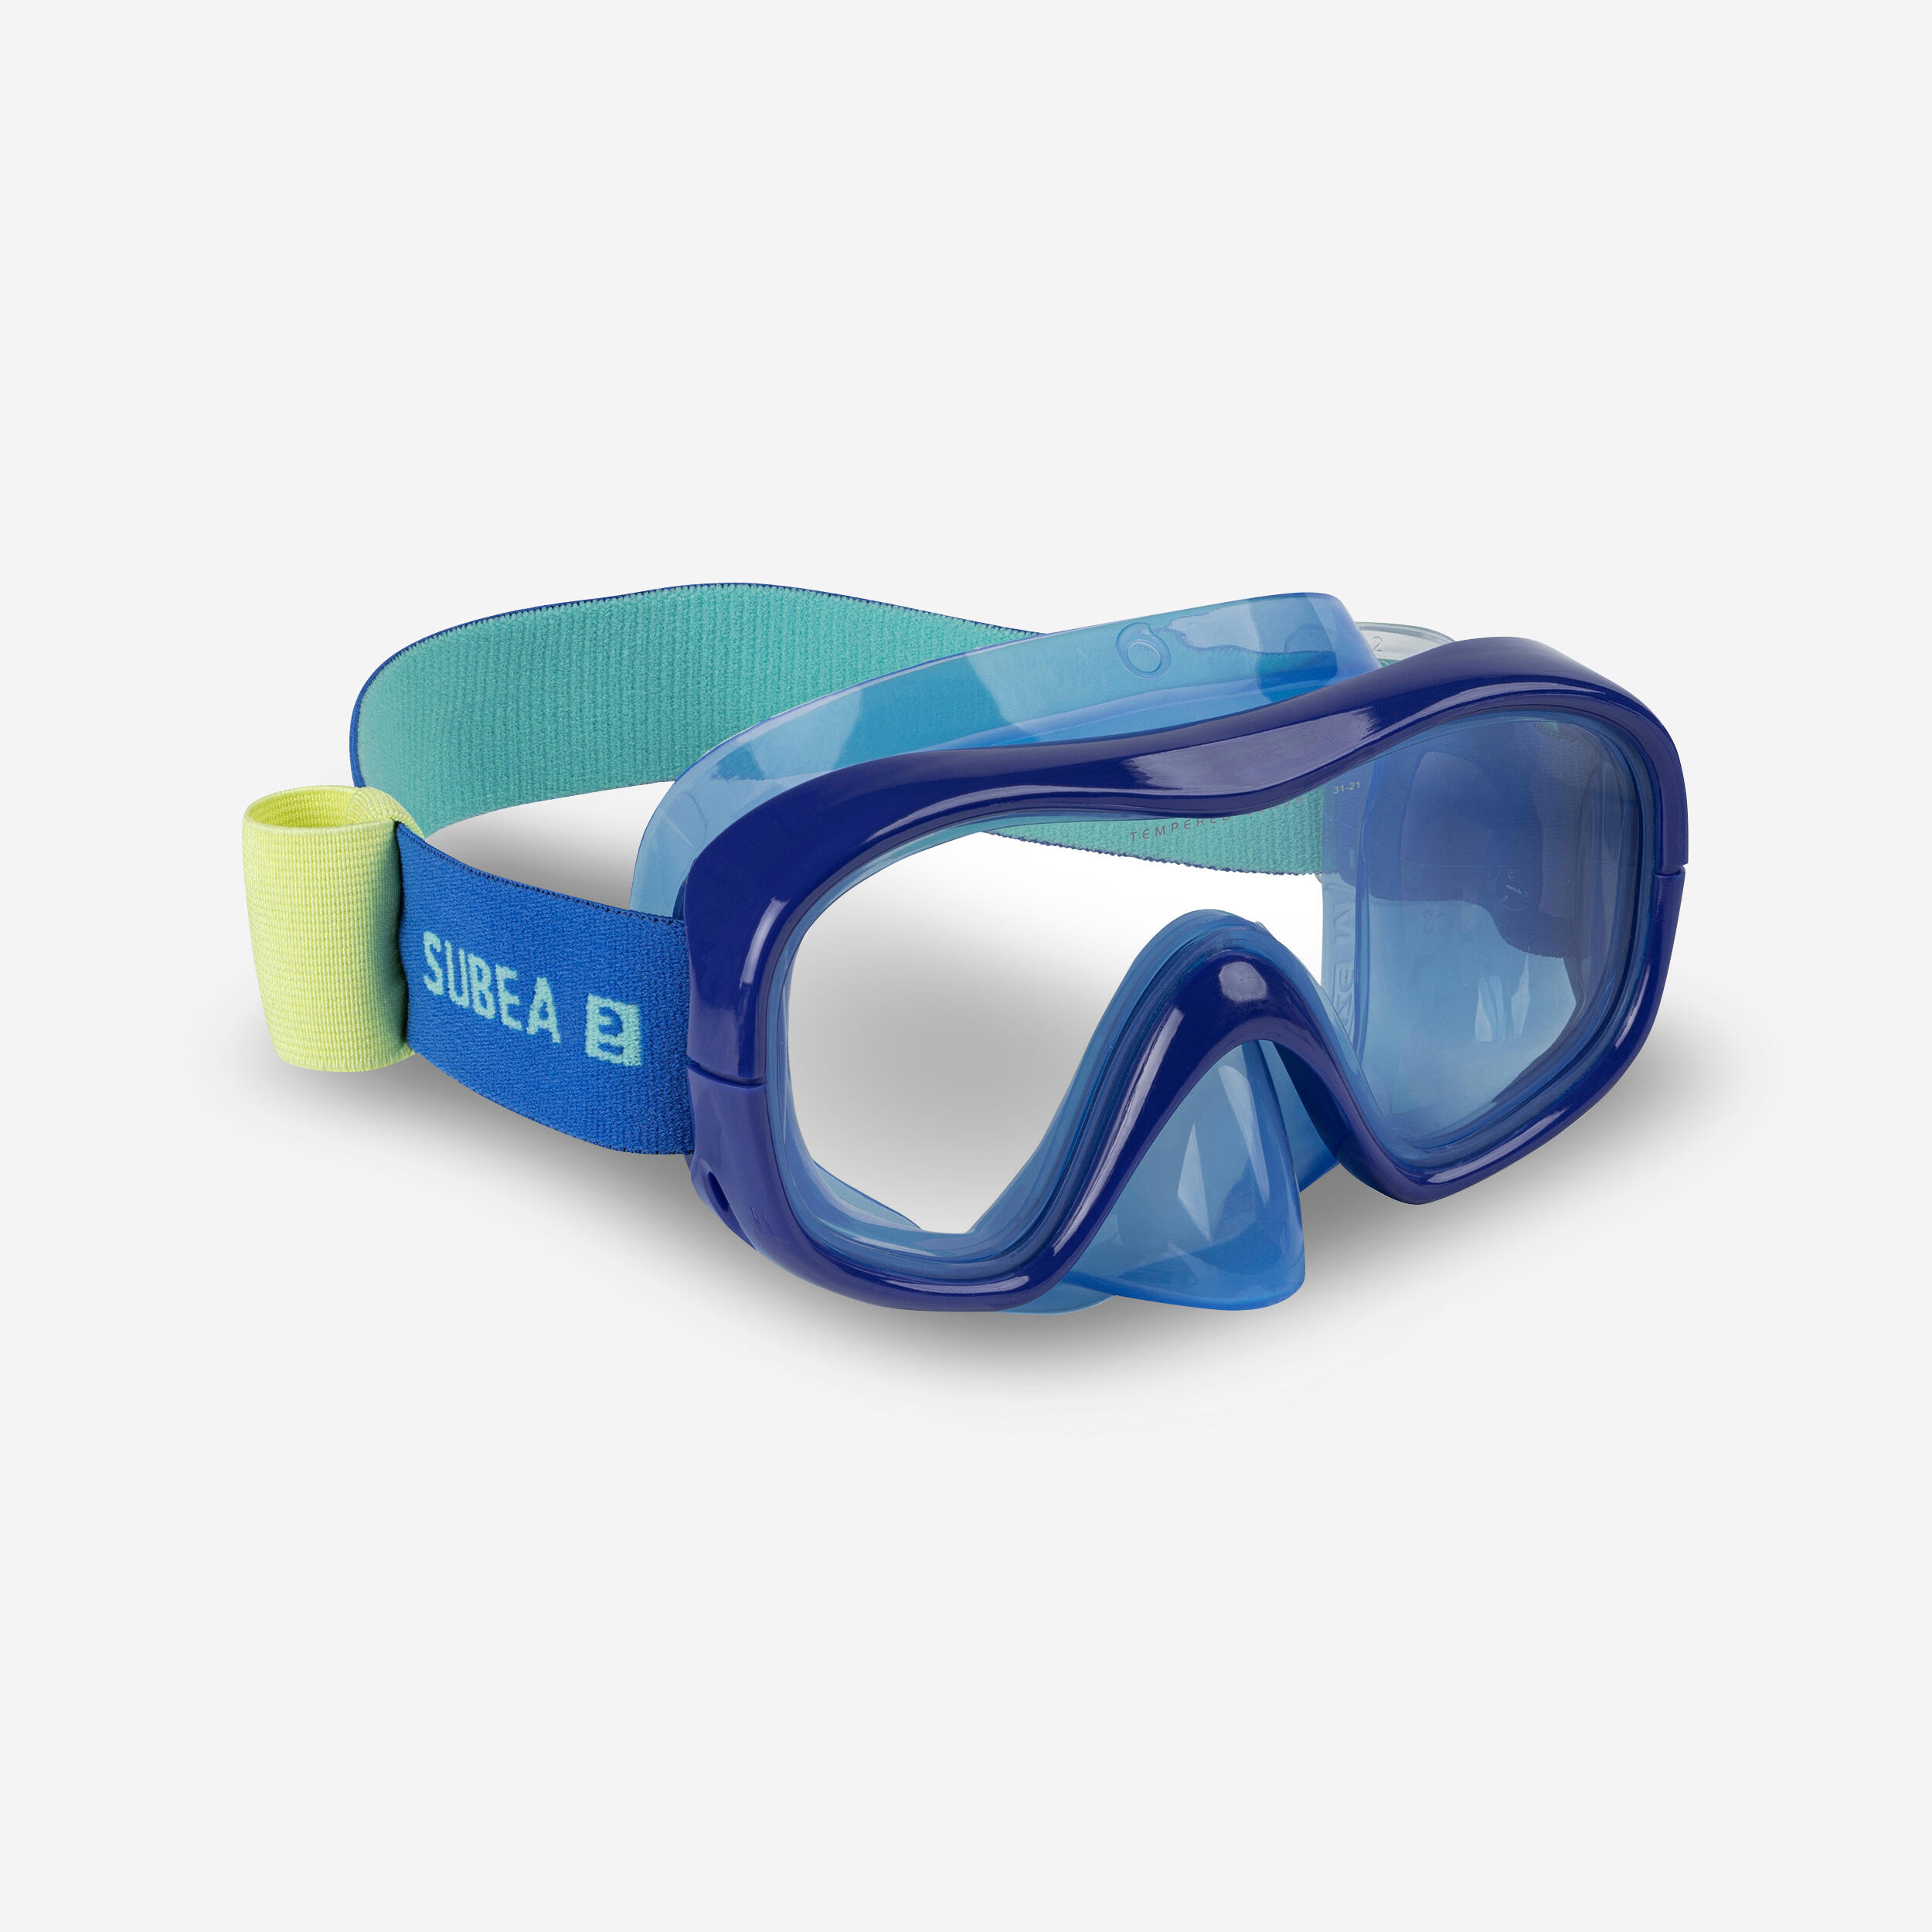 Decathlon | Maschera subacquea 100 blu |  Subea